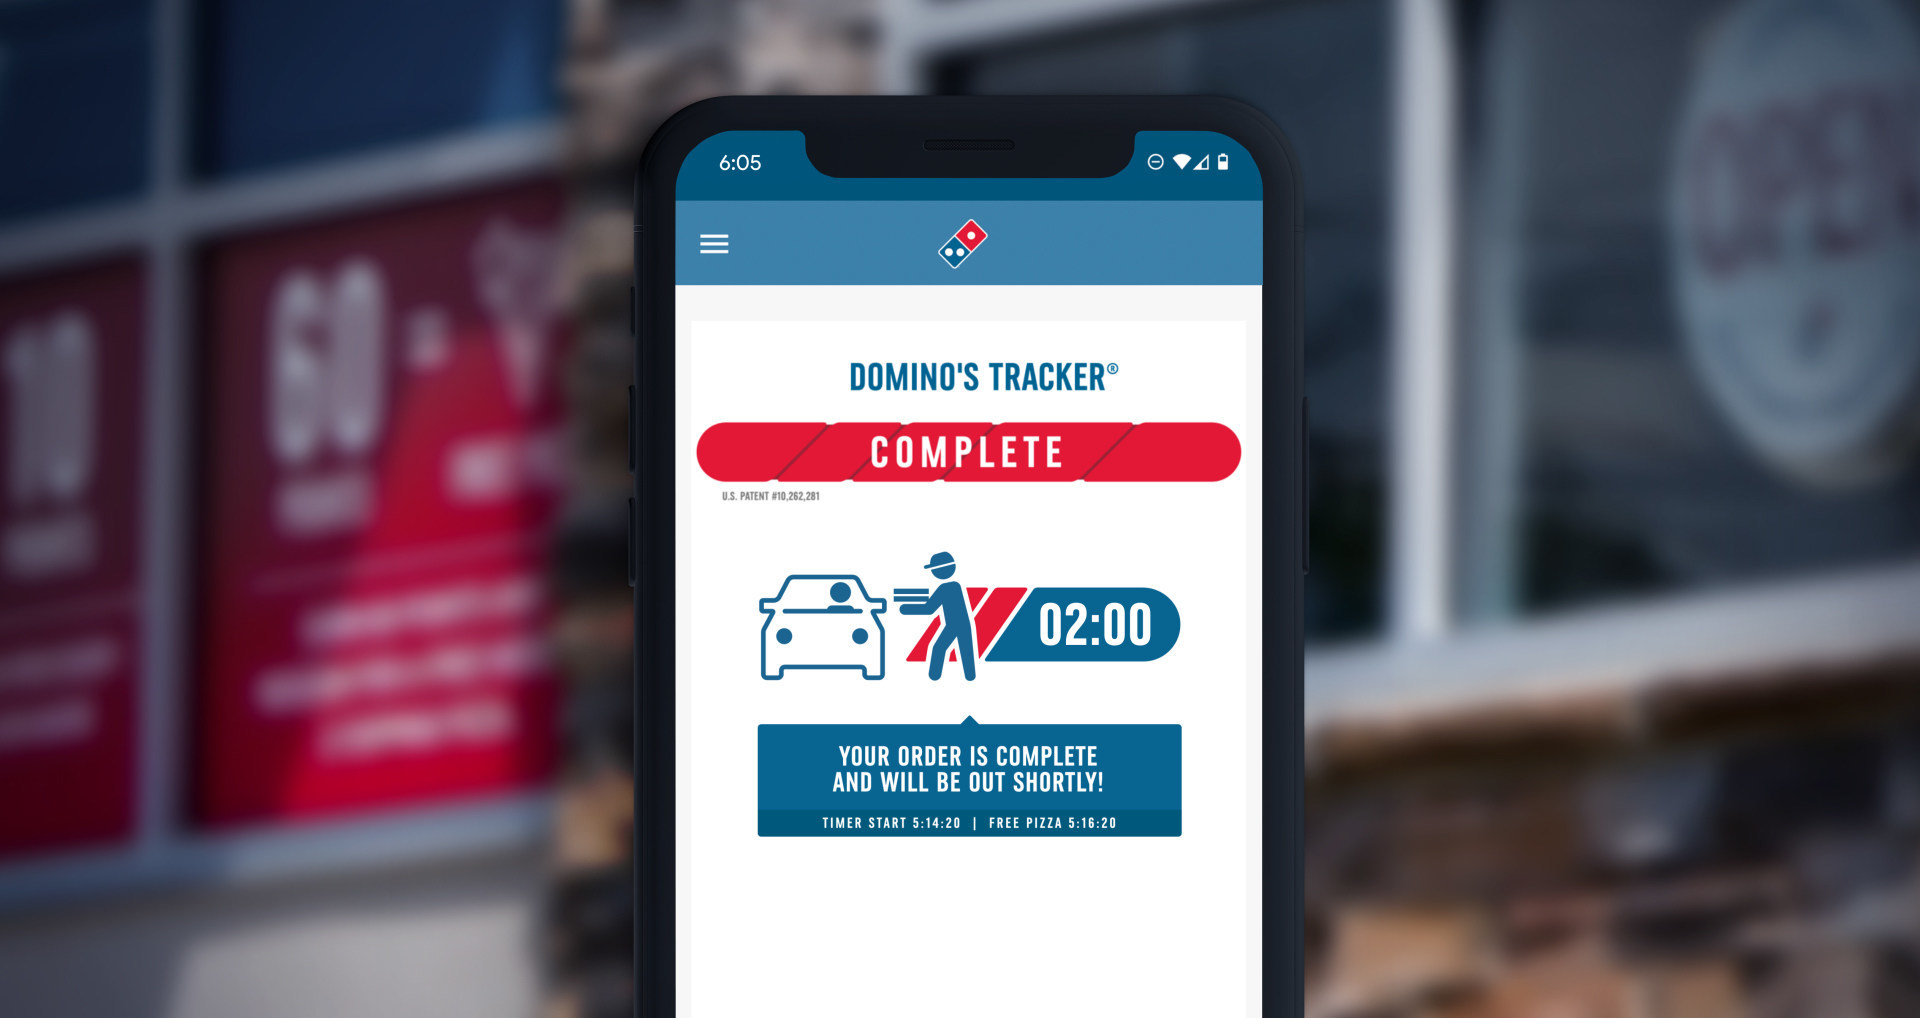 Domino's tracker mobile device view